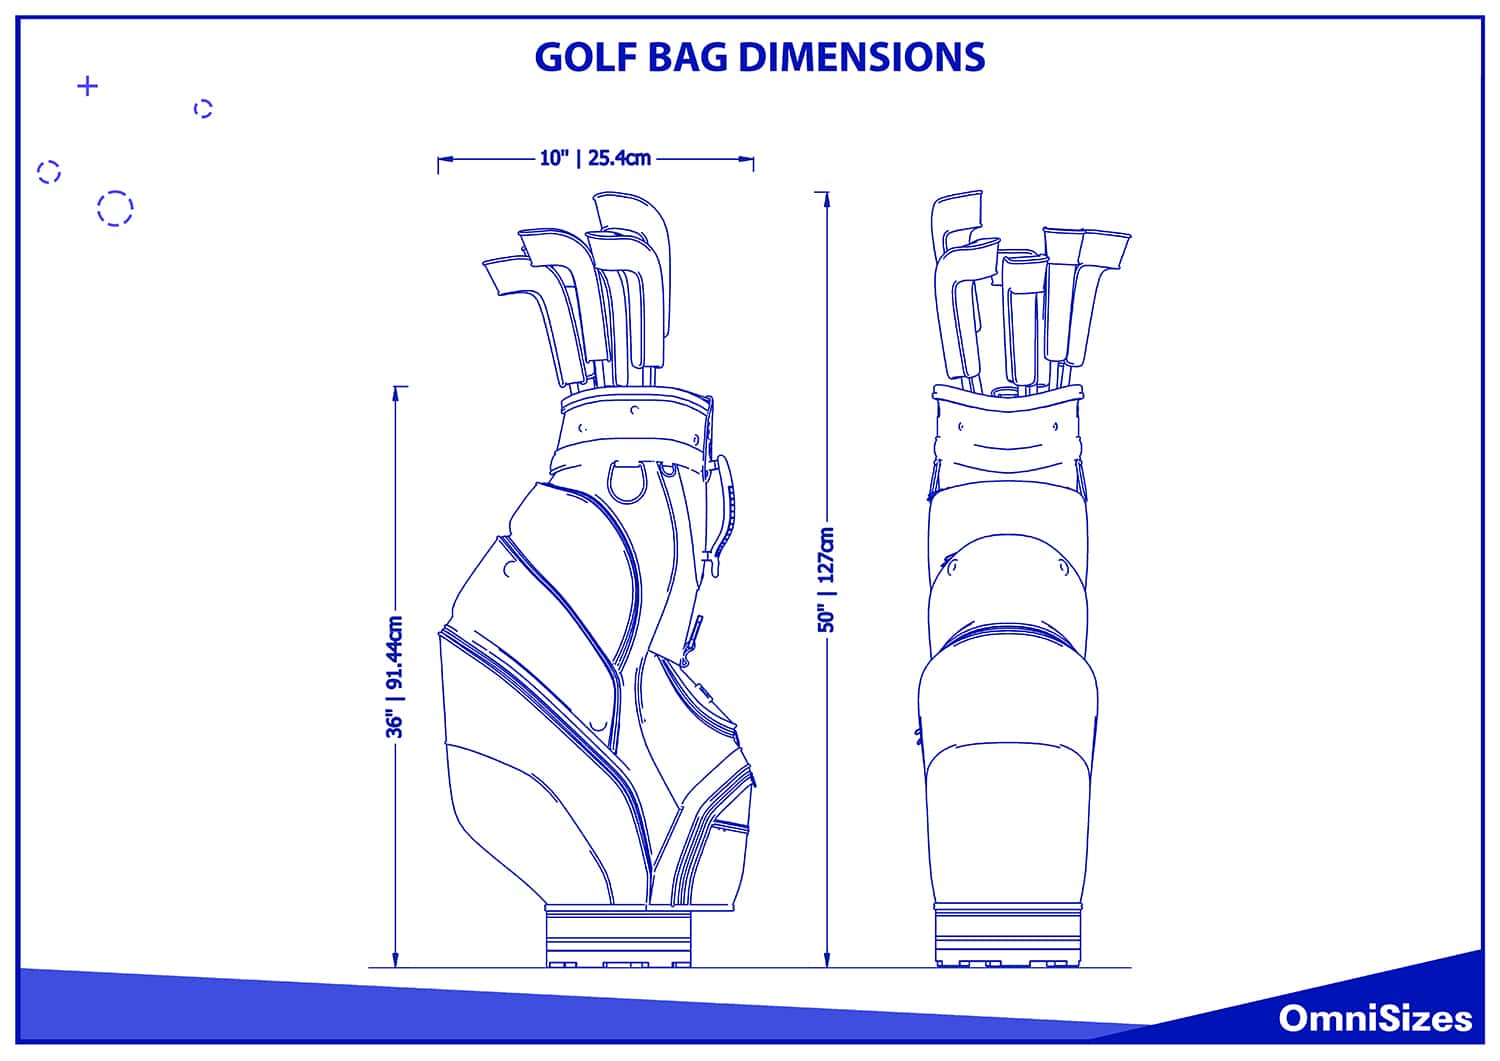 Golf bag dimensions